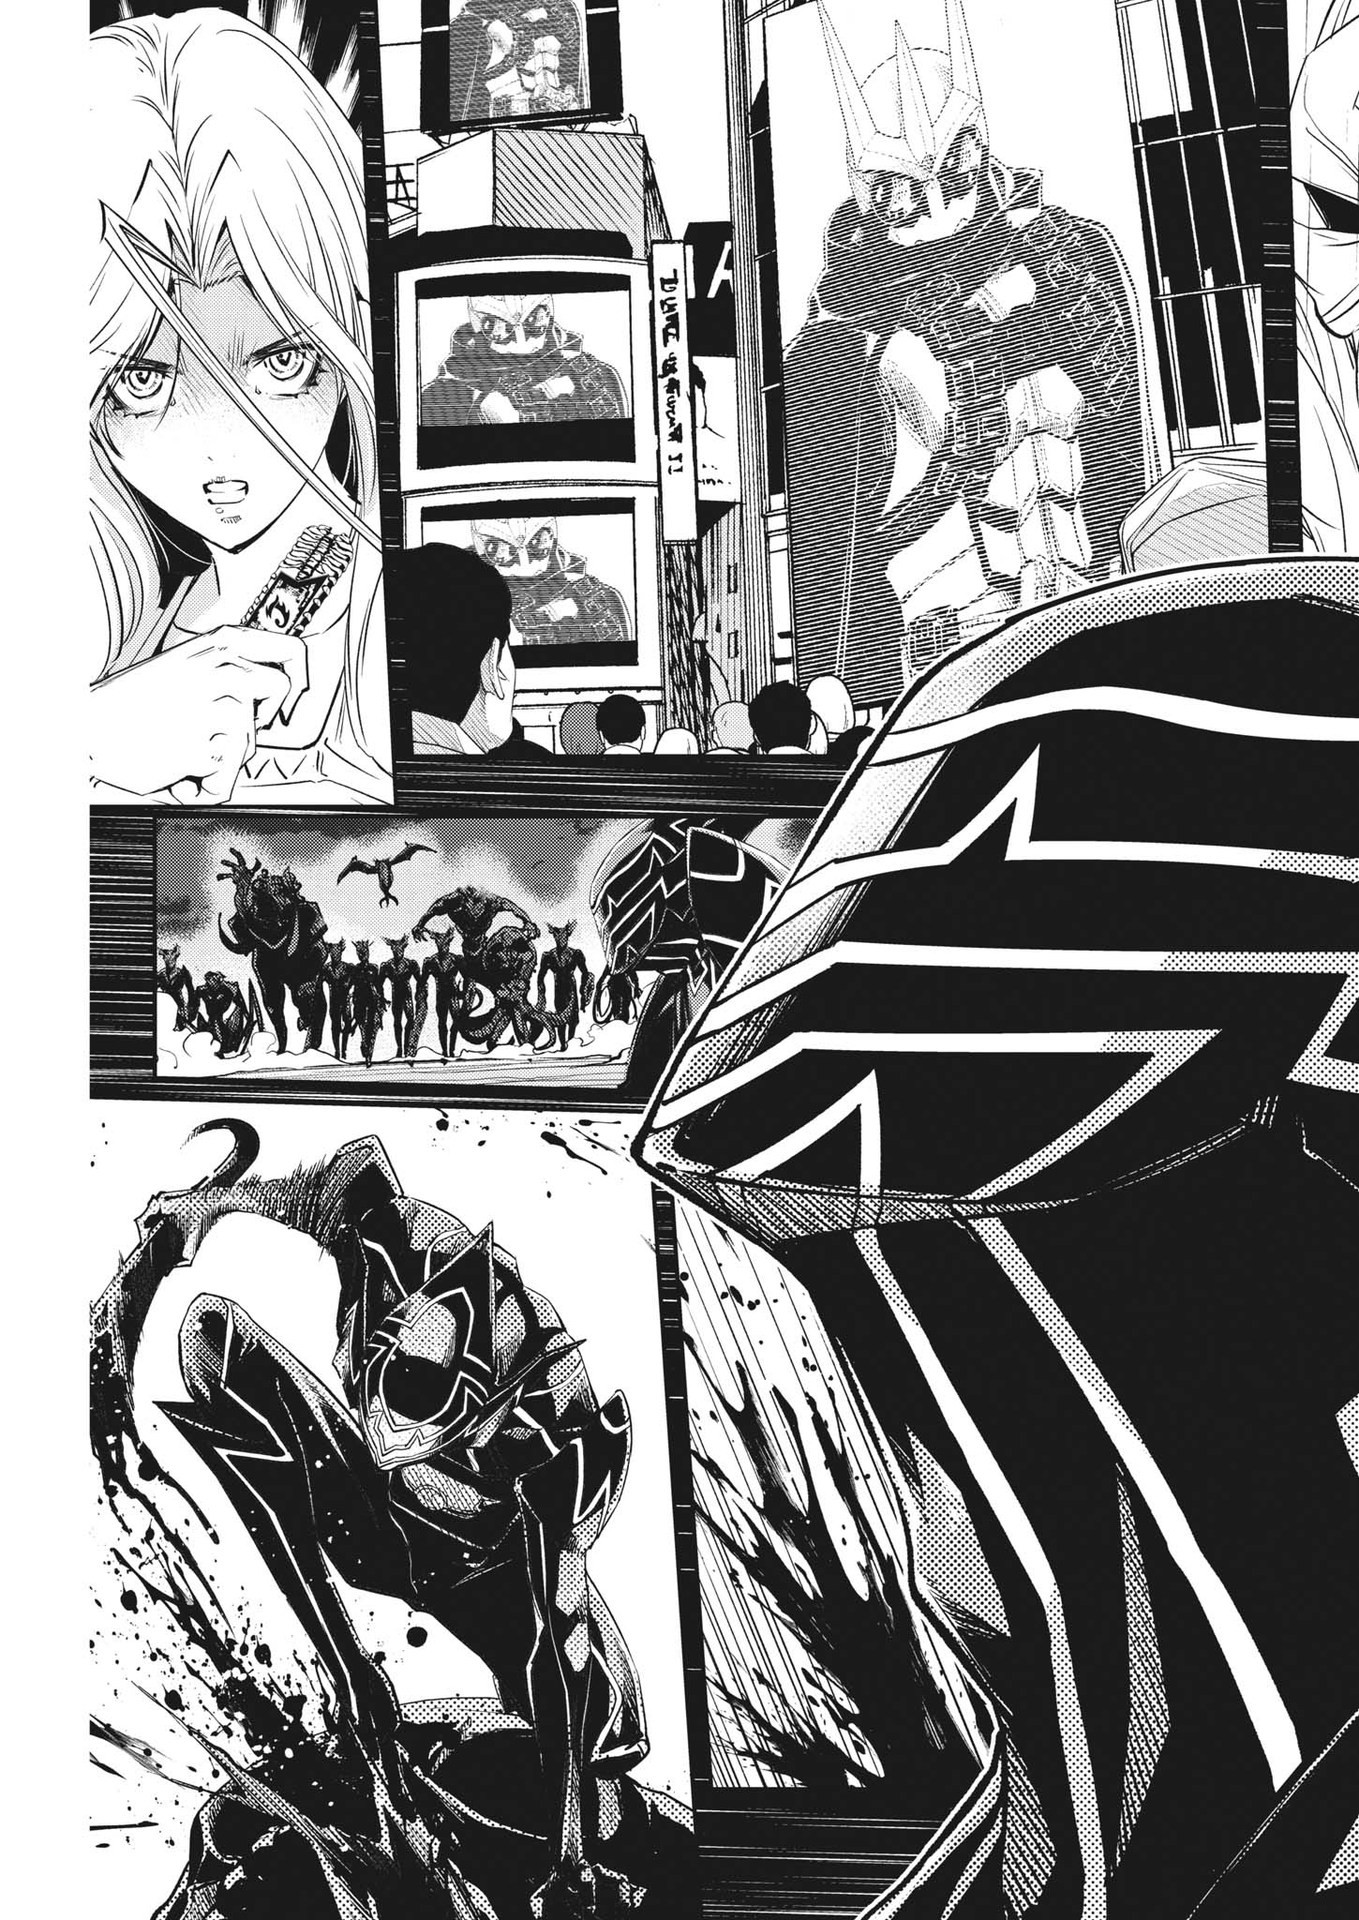 Kamen Rider W) Fuuto PI/Fuuto Tantei Chapter 127 : r/KamenRider